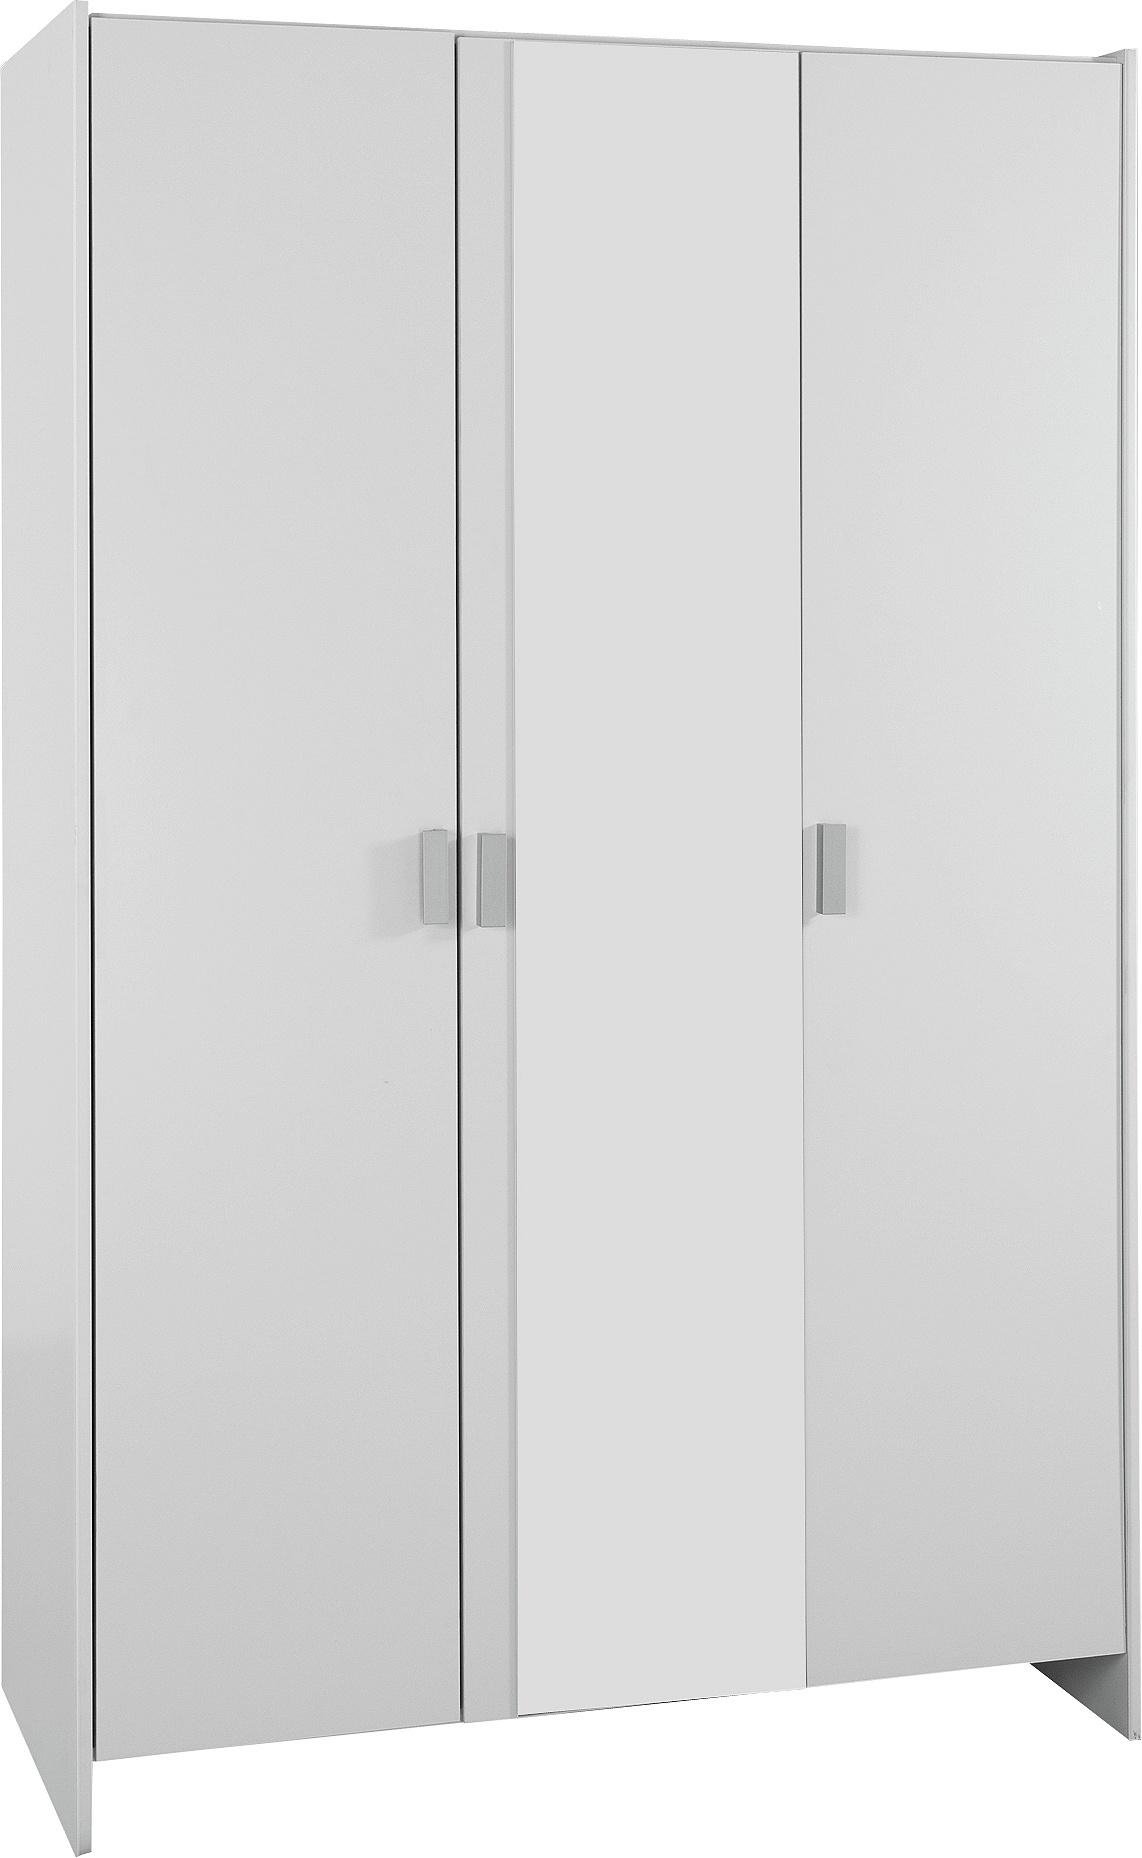 Argos Home Capella 3 Door Mirrored Wardrobe - White